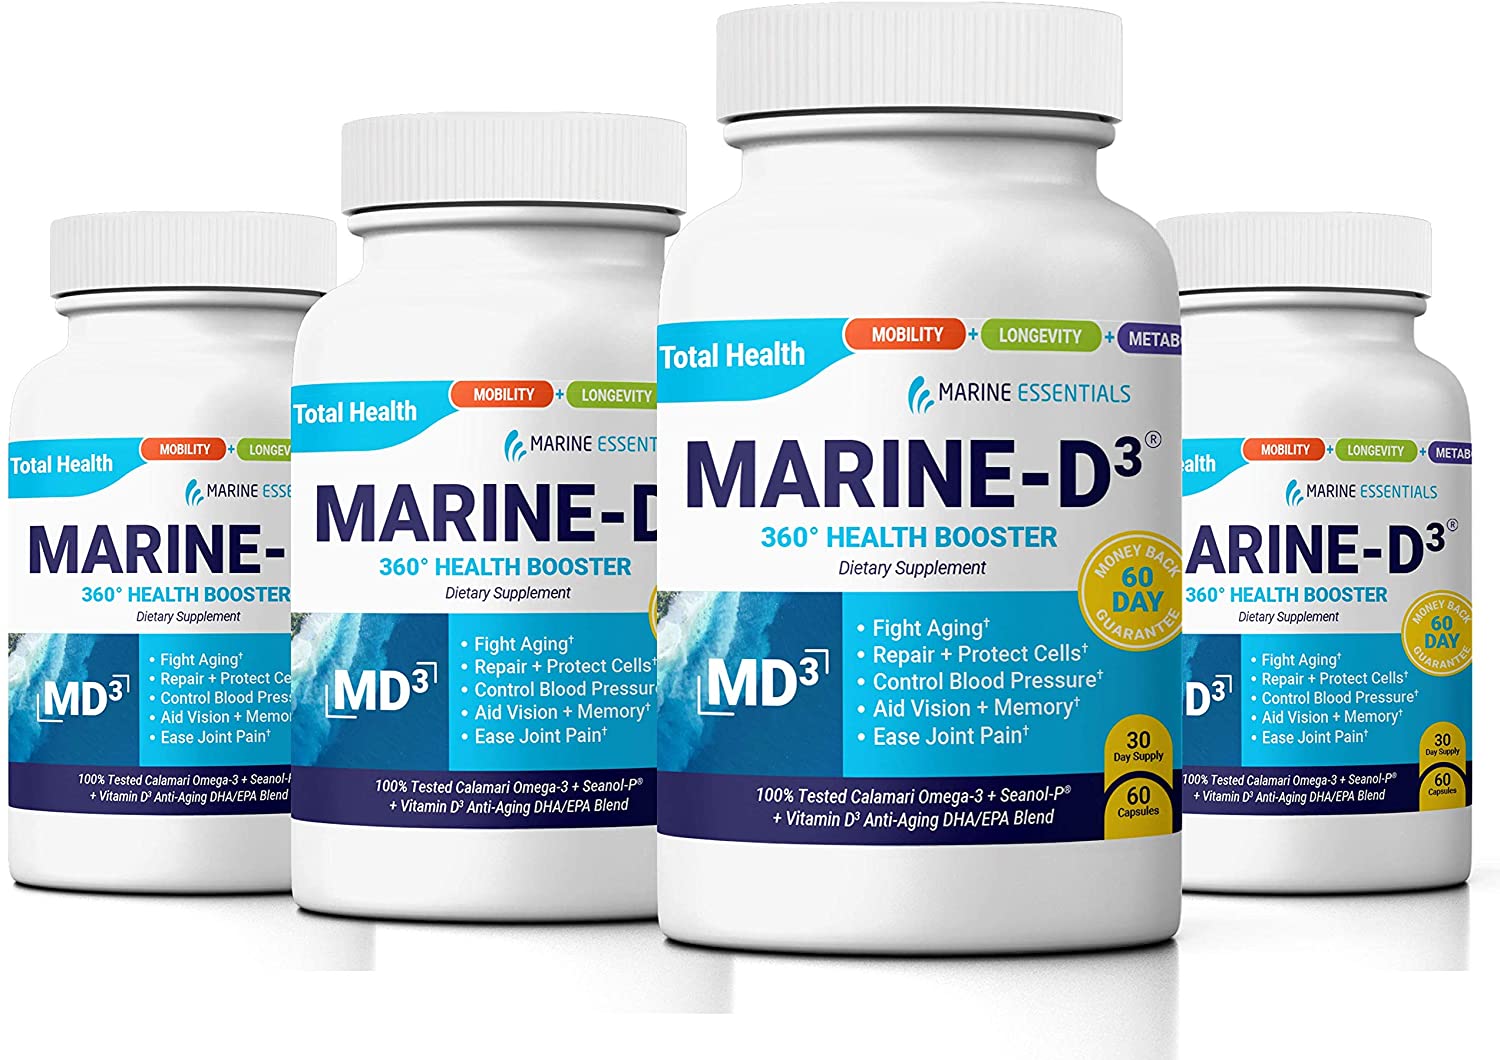 4 bottles of the Marine-D3 supplement